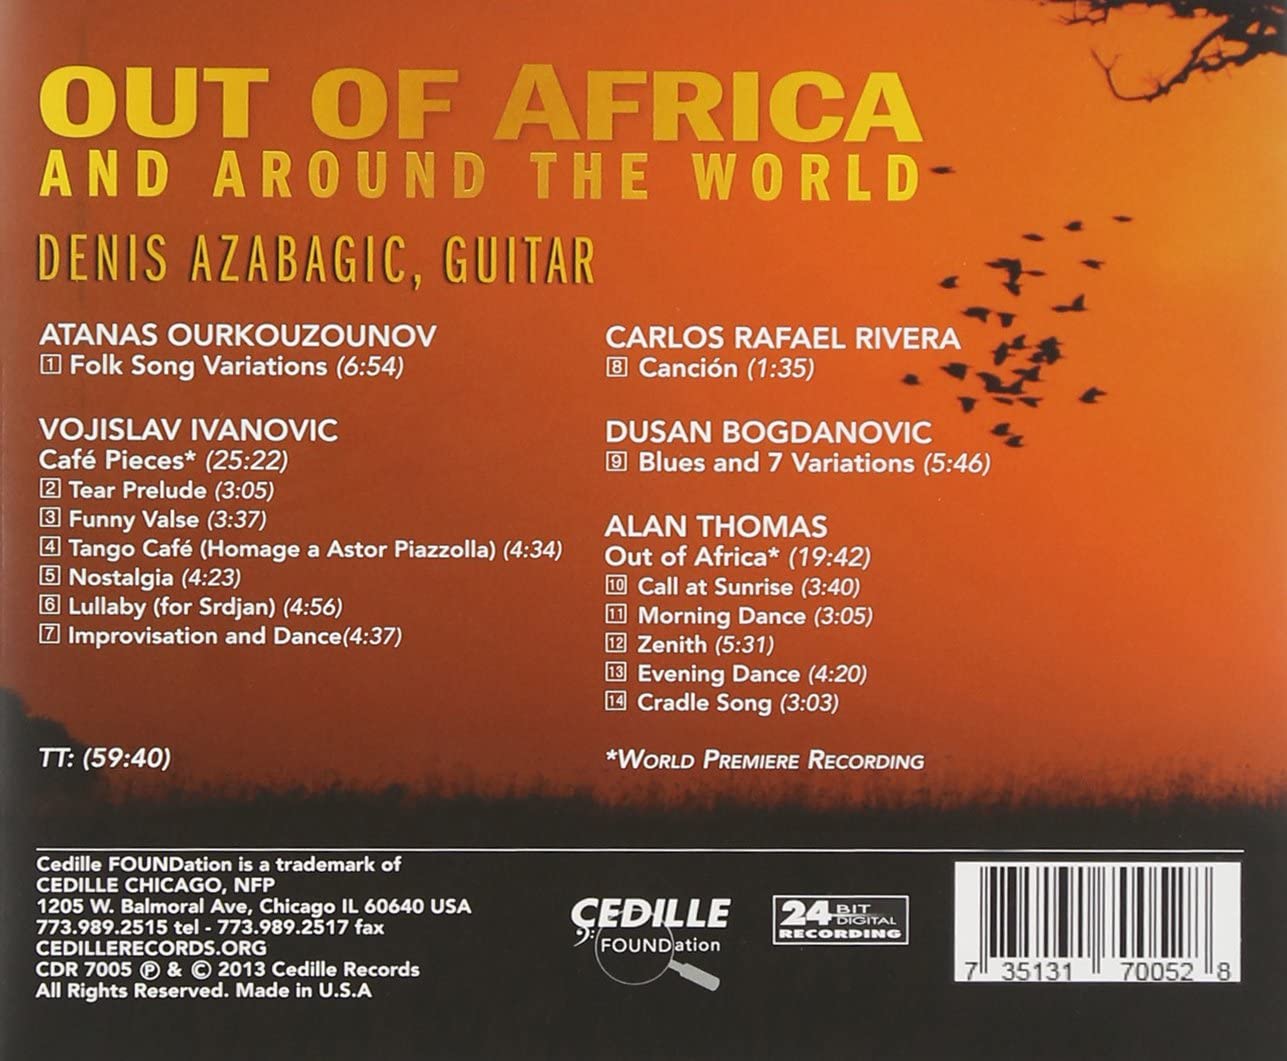 Out of Africa - V. Ivanovic, C. Rafael, Relivera, D. Bogdanovic, A. Thomas - slide-1